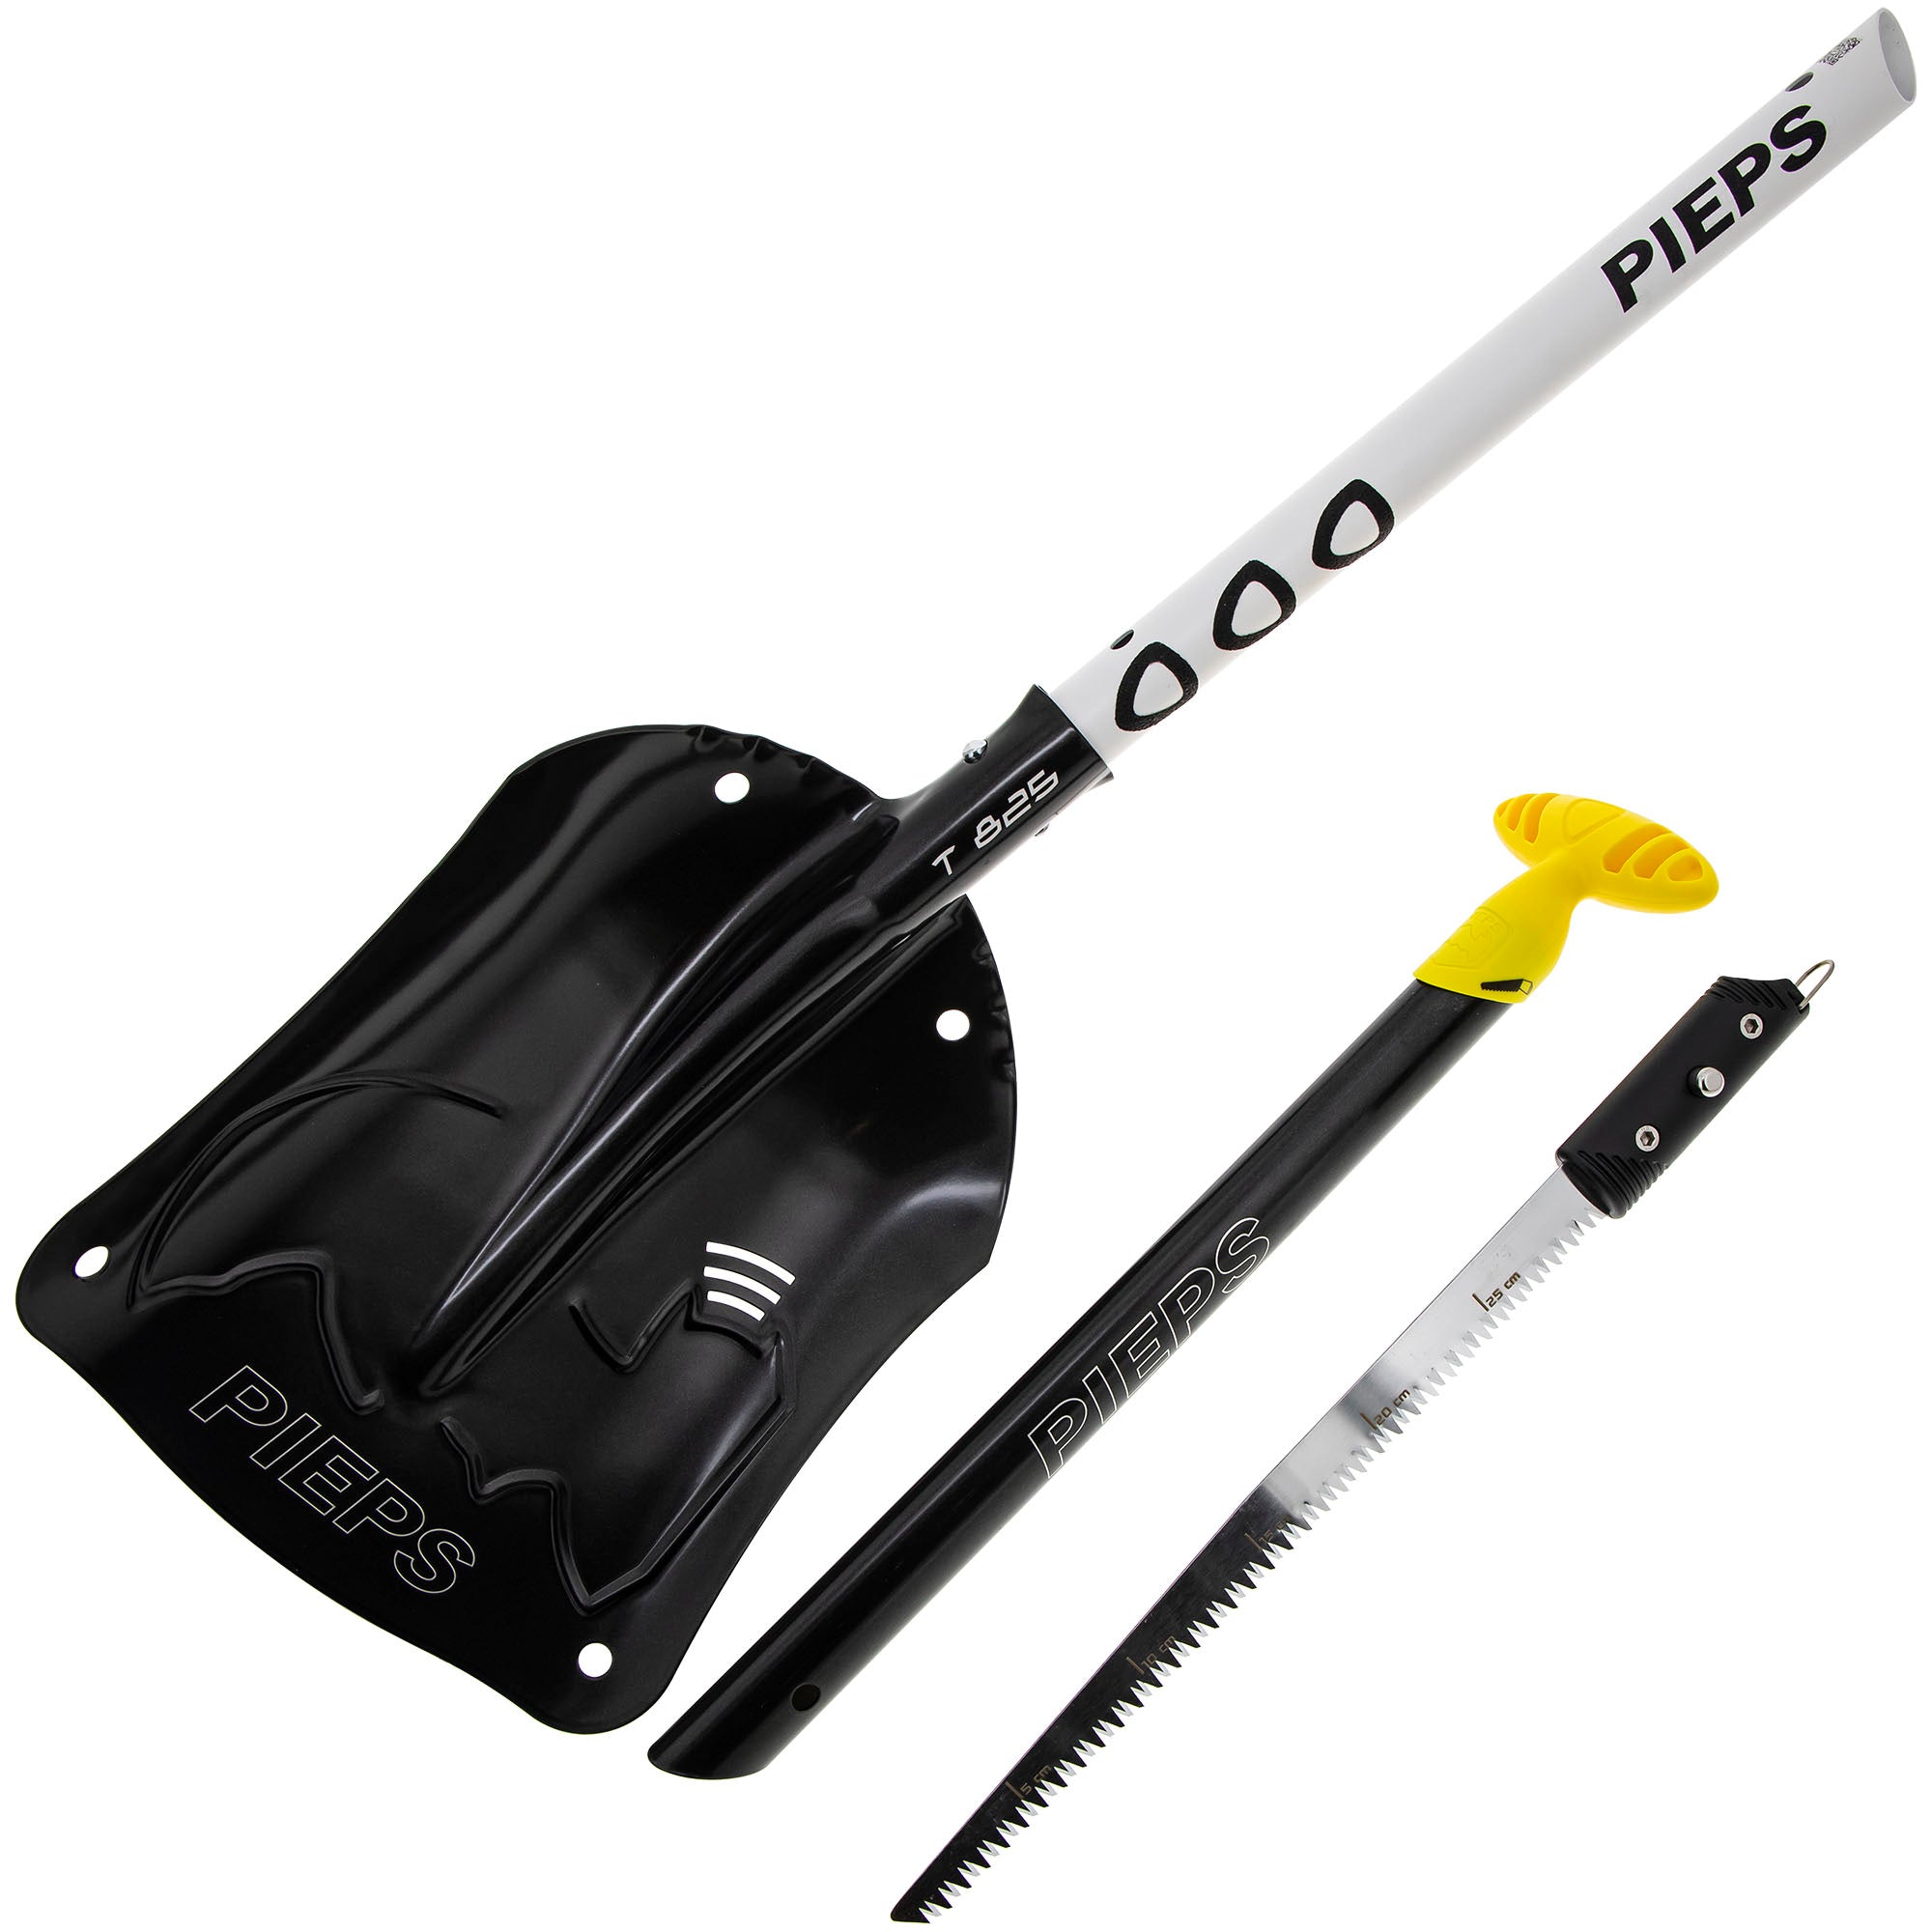 Polaris PIEPS Pro+ T 825 Shovel with Saw Blade 2883680